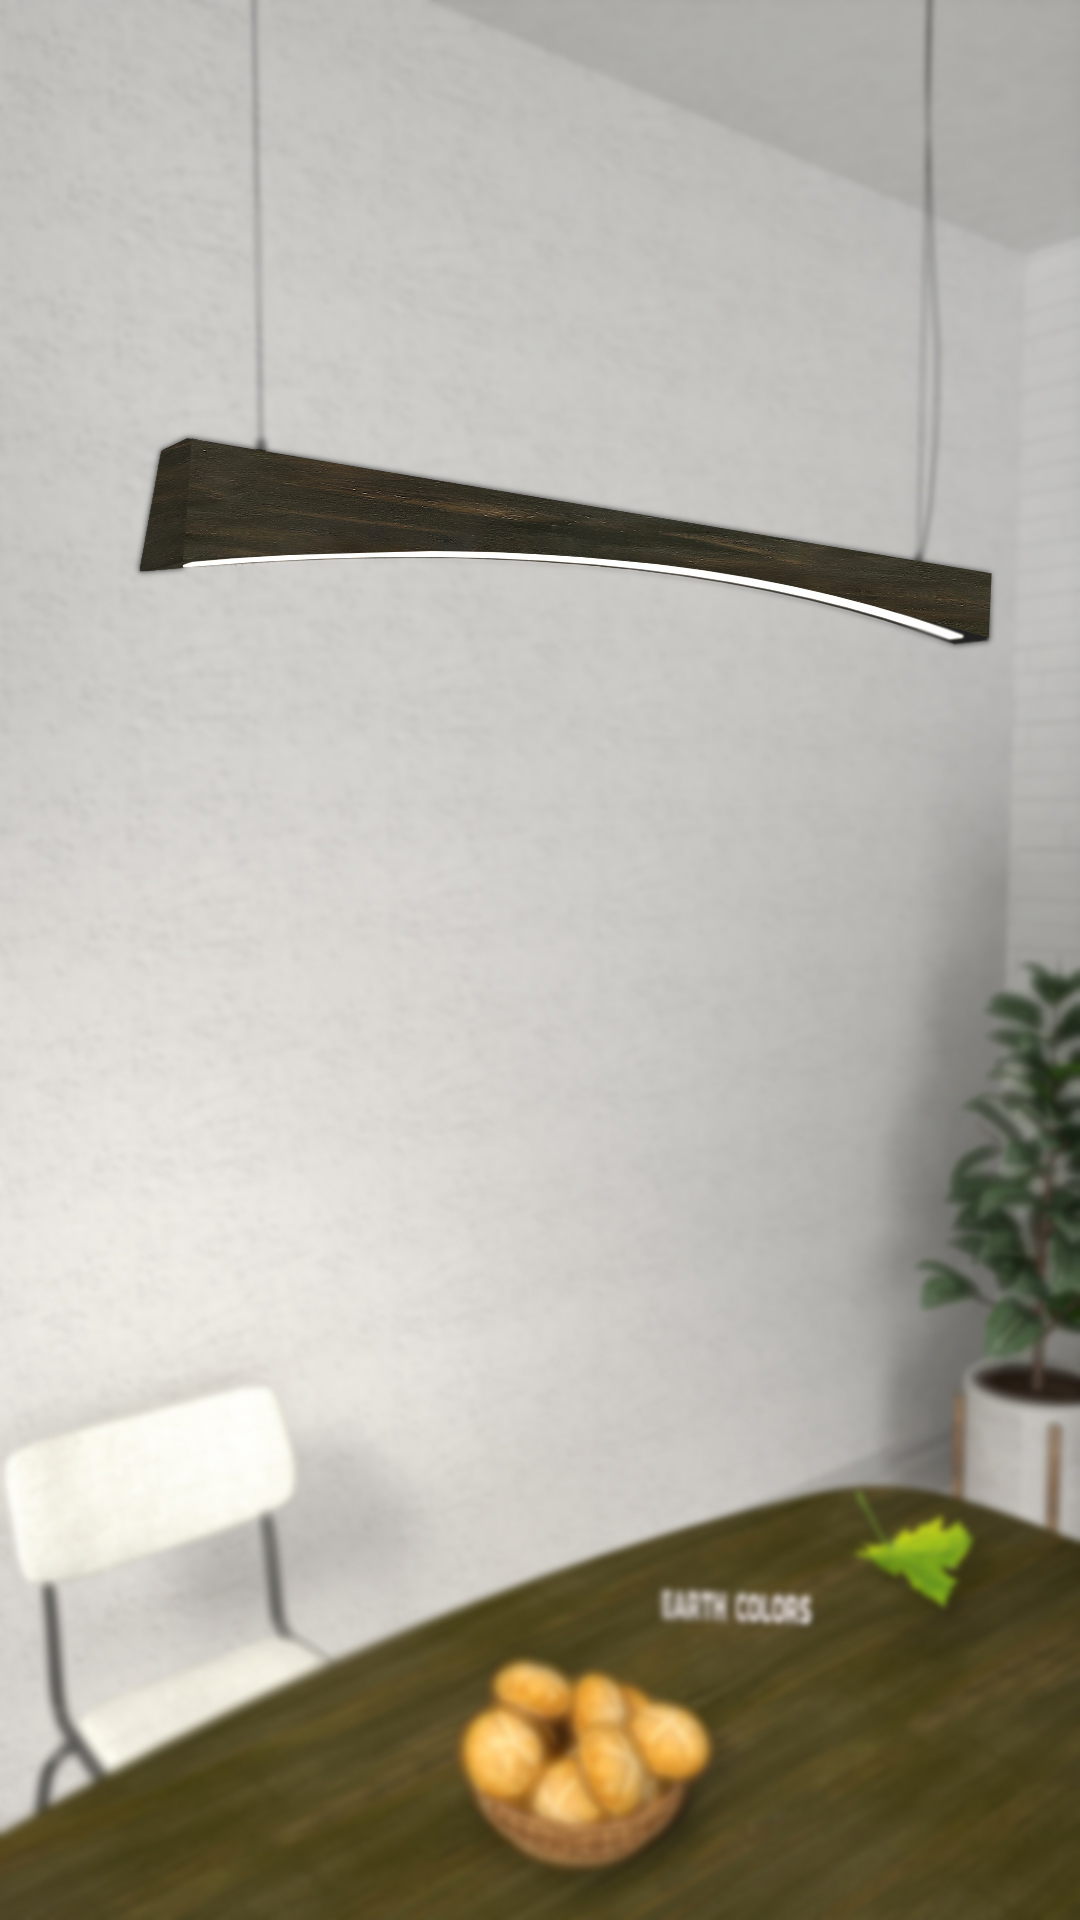 Slim Chandelier with wood enhance room modern style